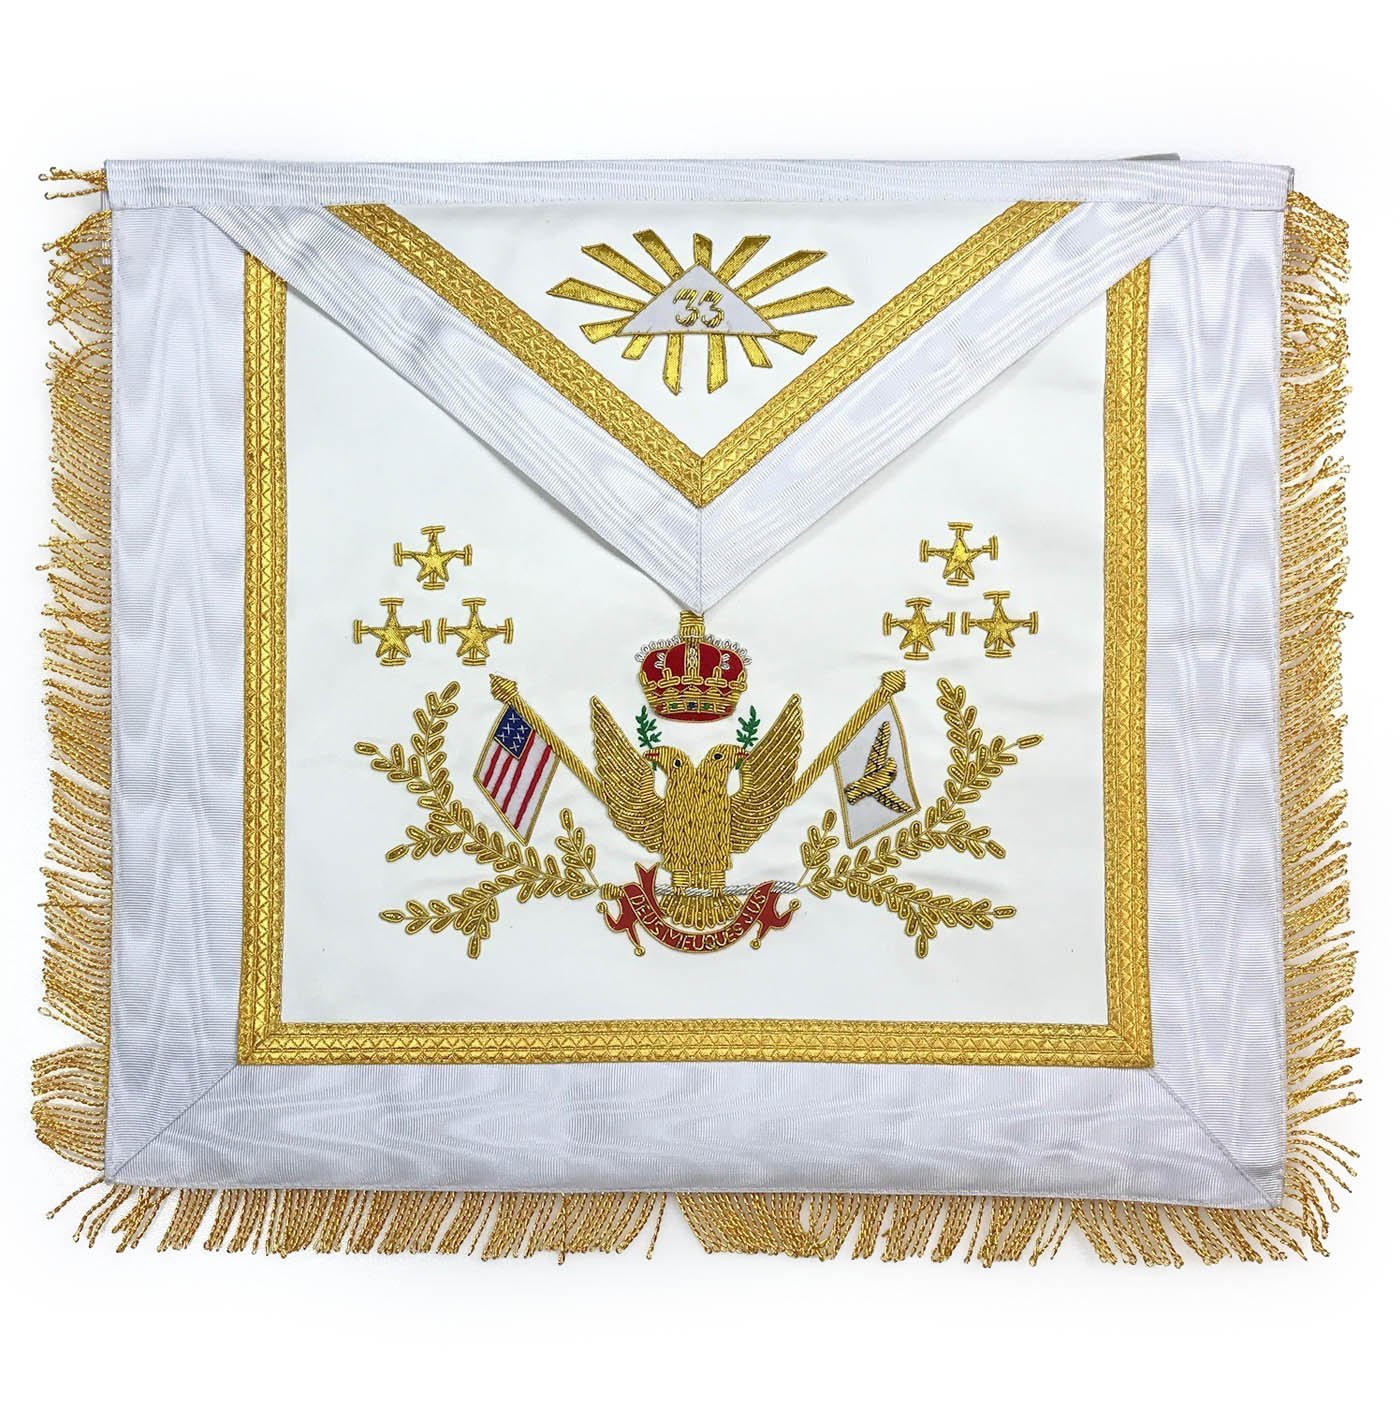 33rd Degree Scottish Rite Regalia Set - WINGS UP All Countries Flags - Bricks Masons